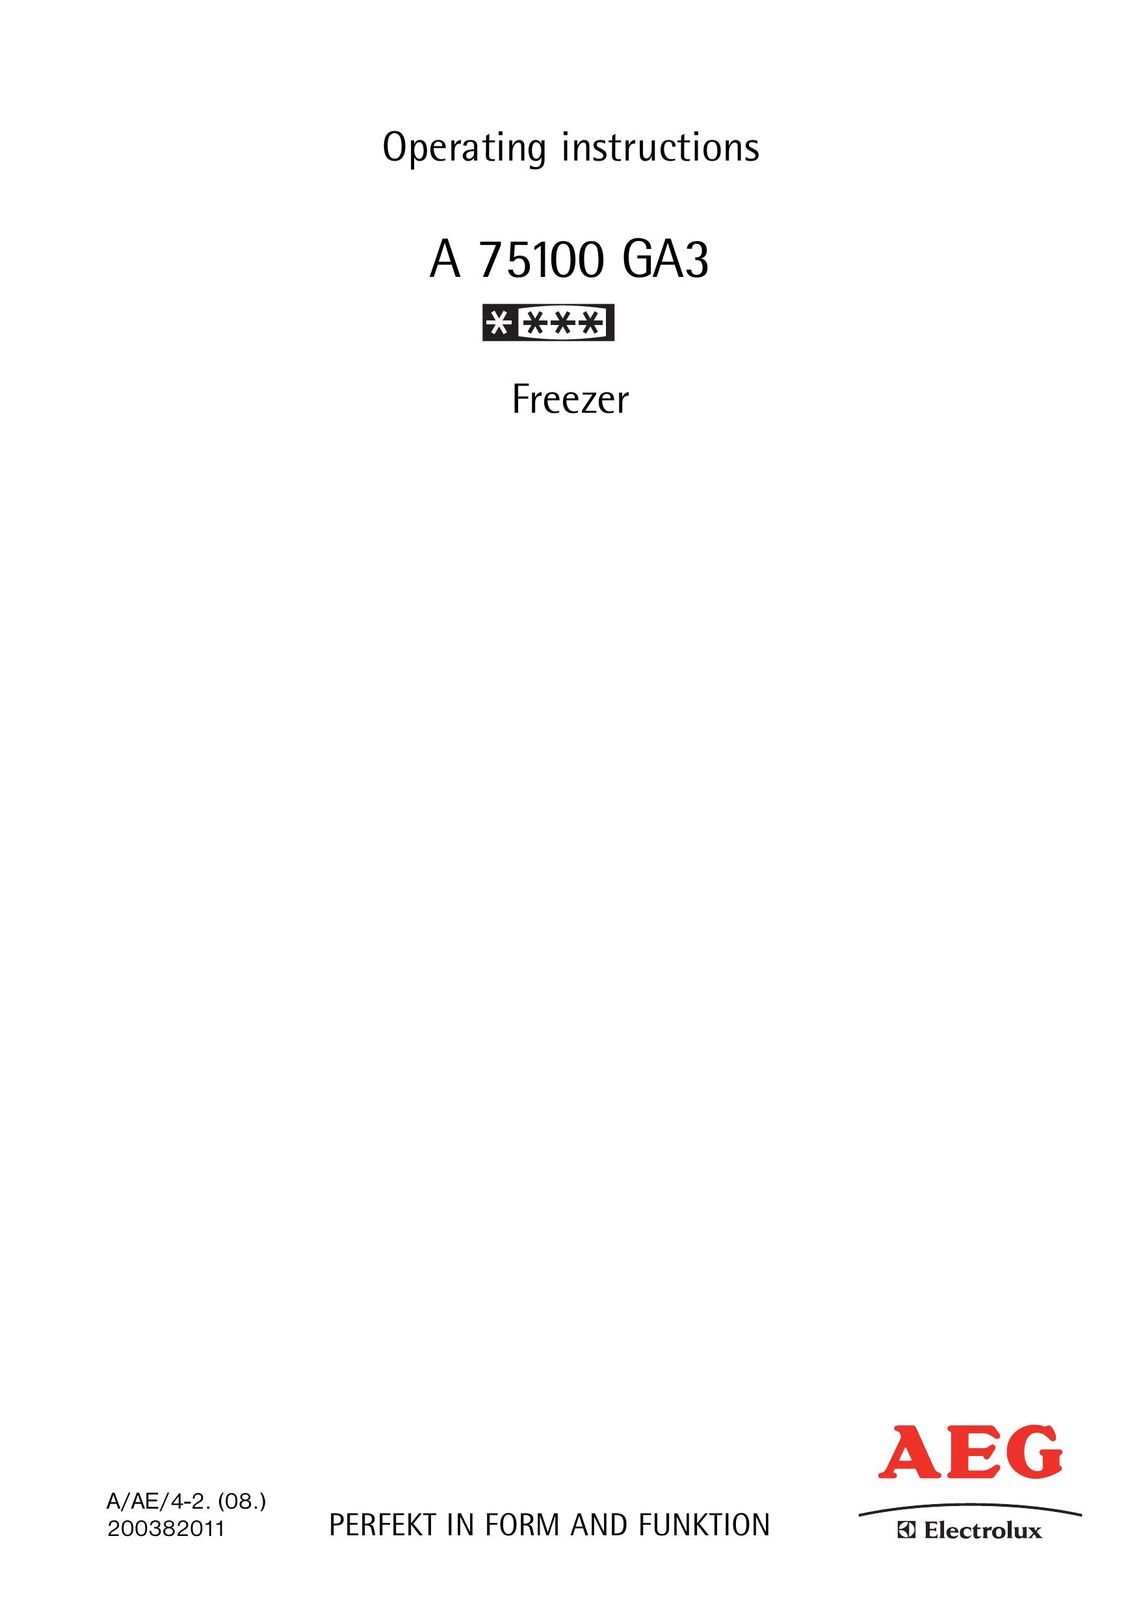 AEG A 75100 GA3 Freezer User Manual